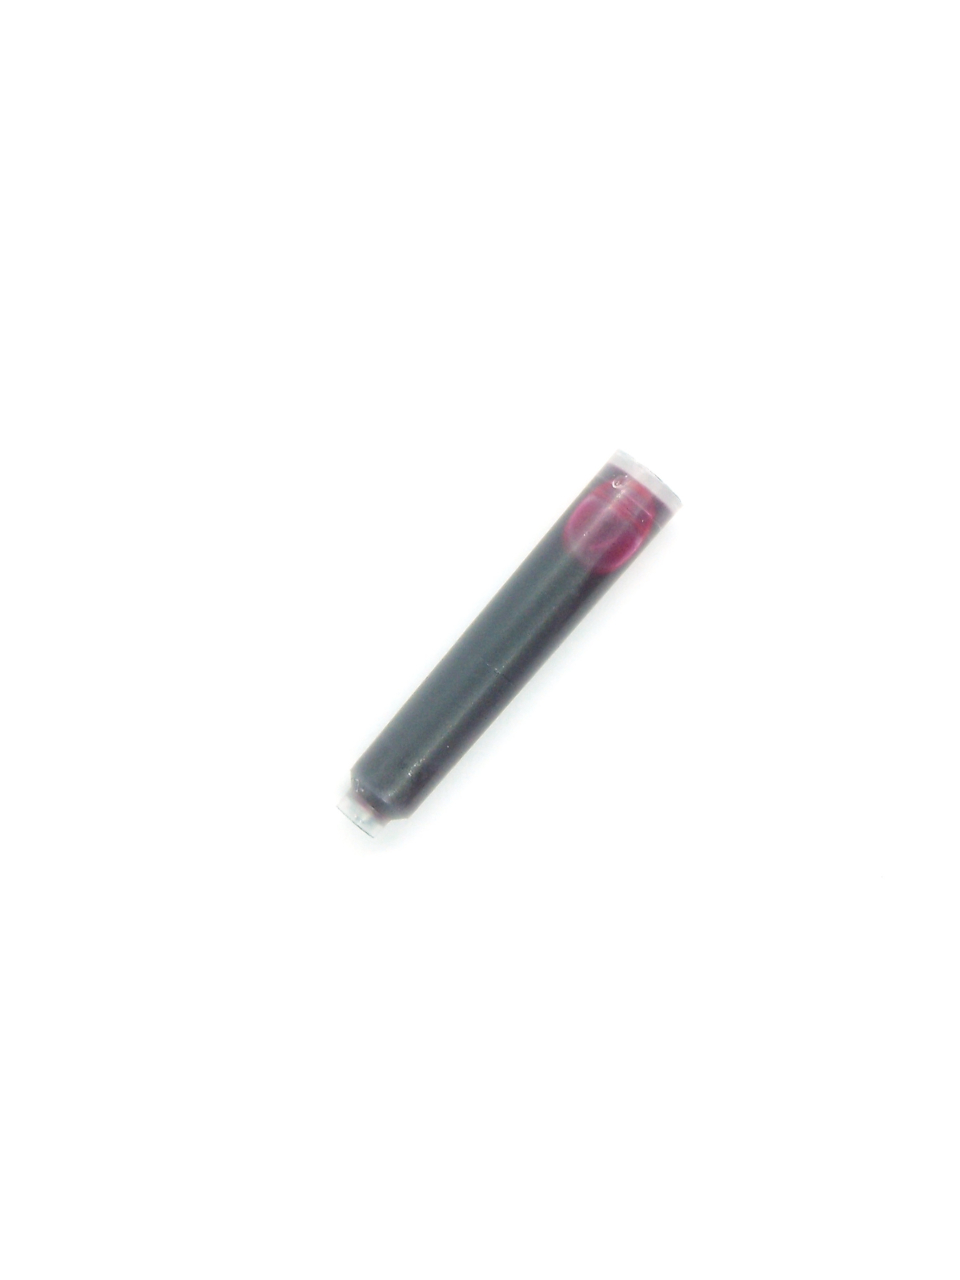 Ink Cartridges For Waldmann Fountain Pens (Pink)